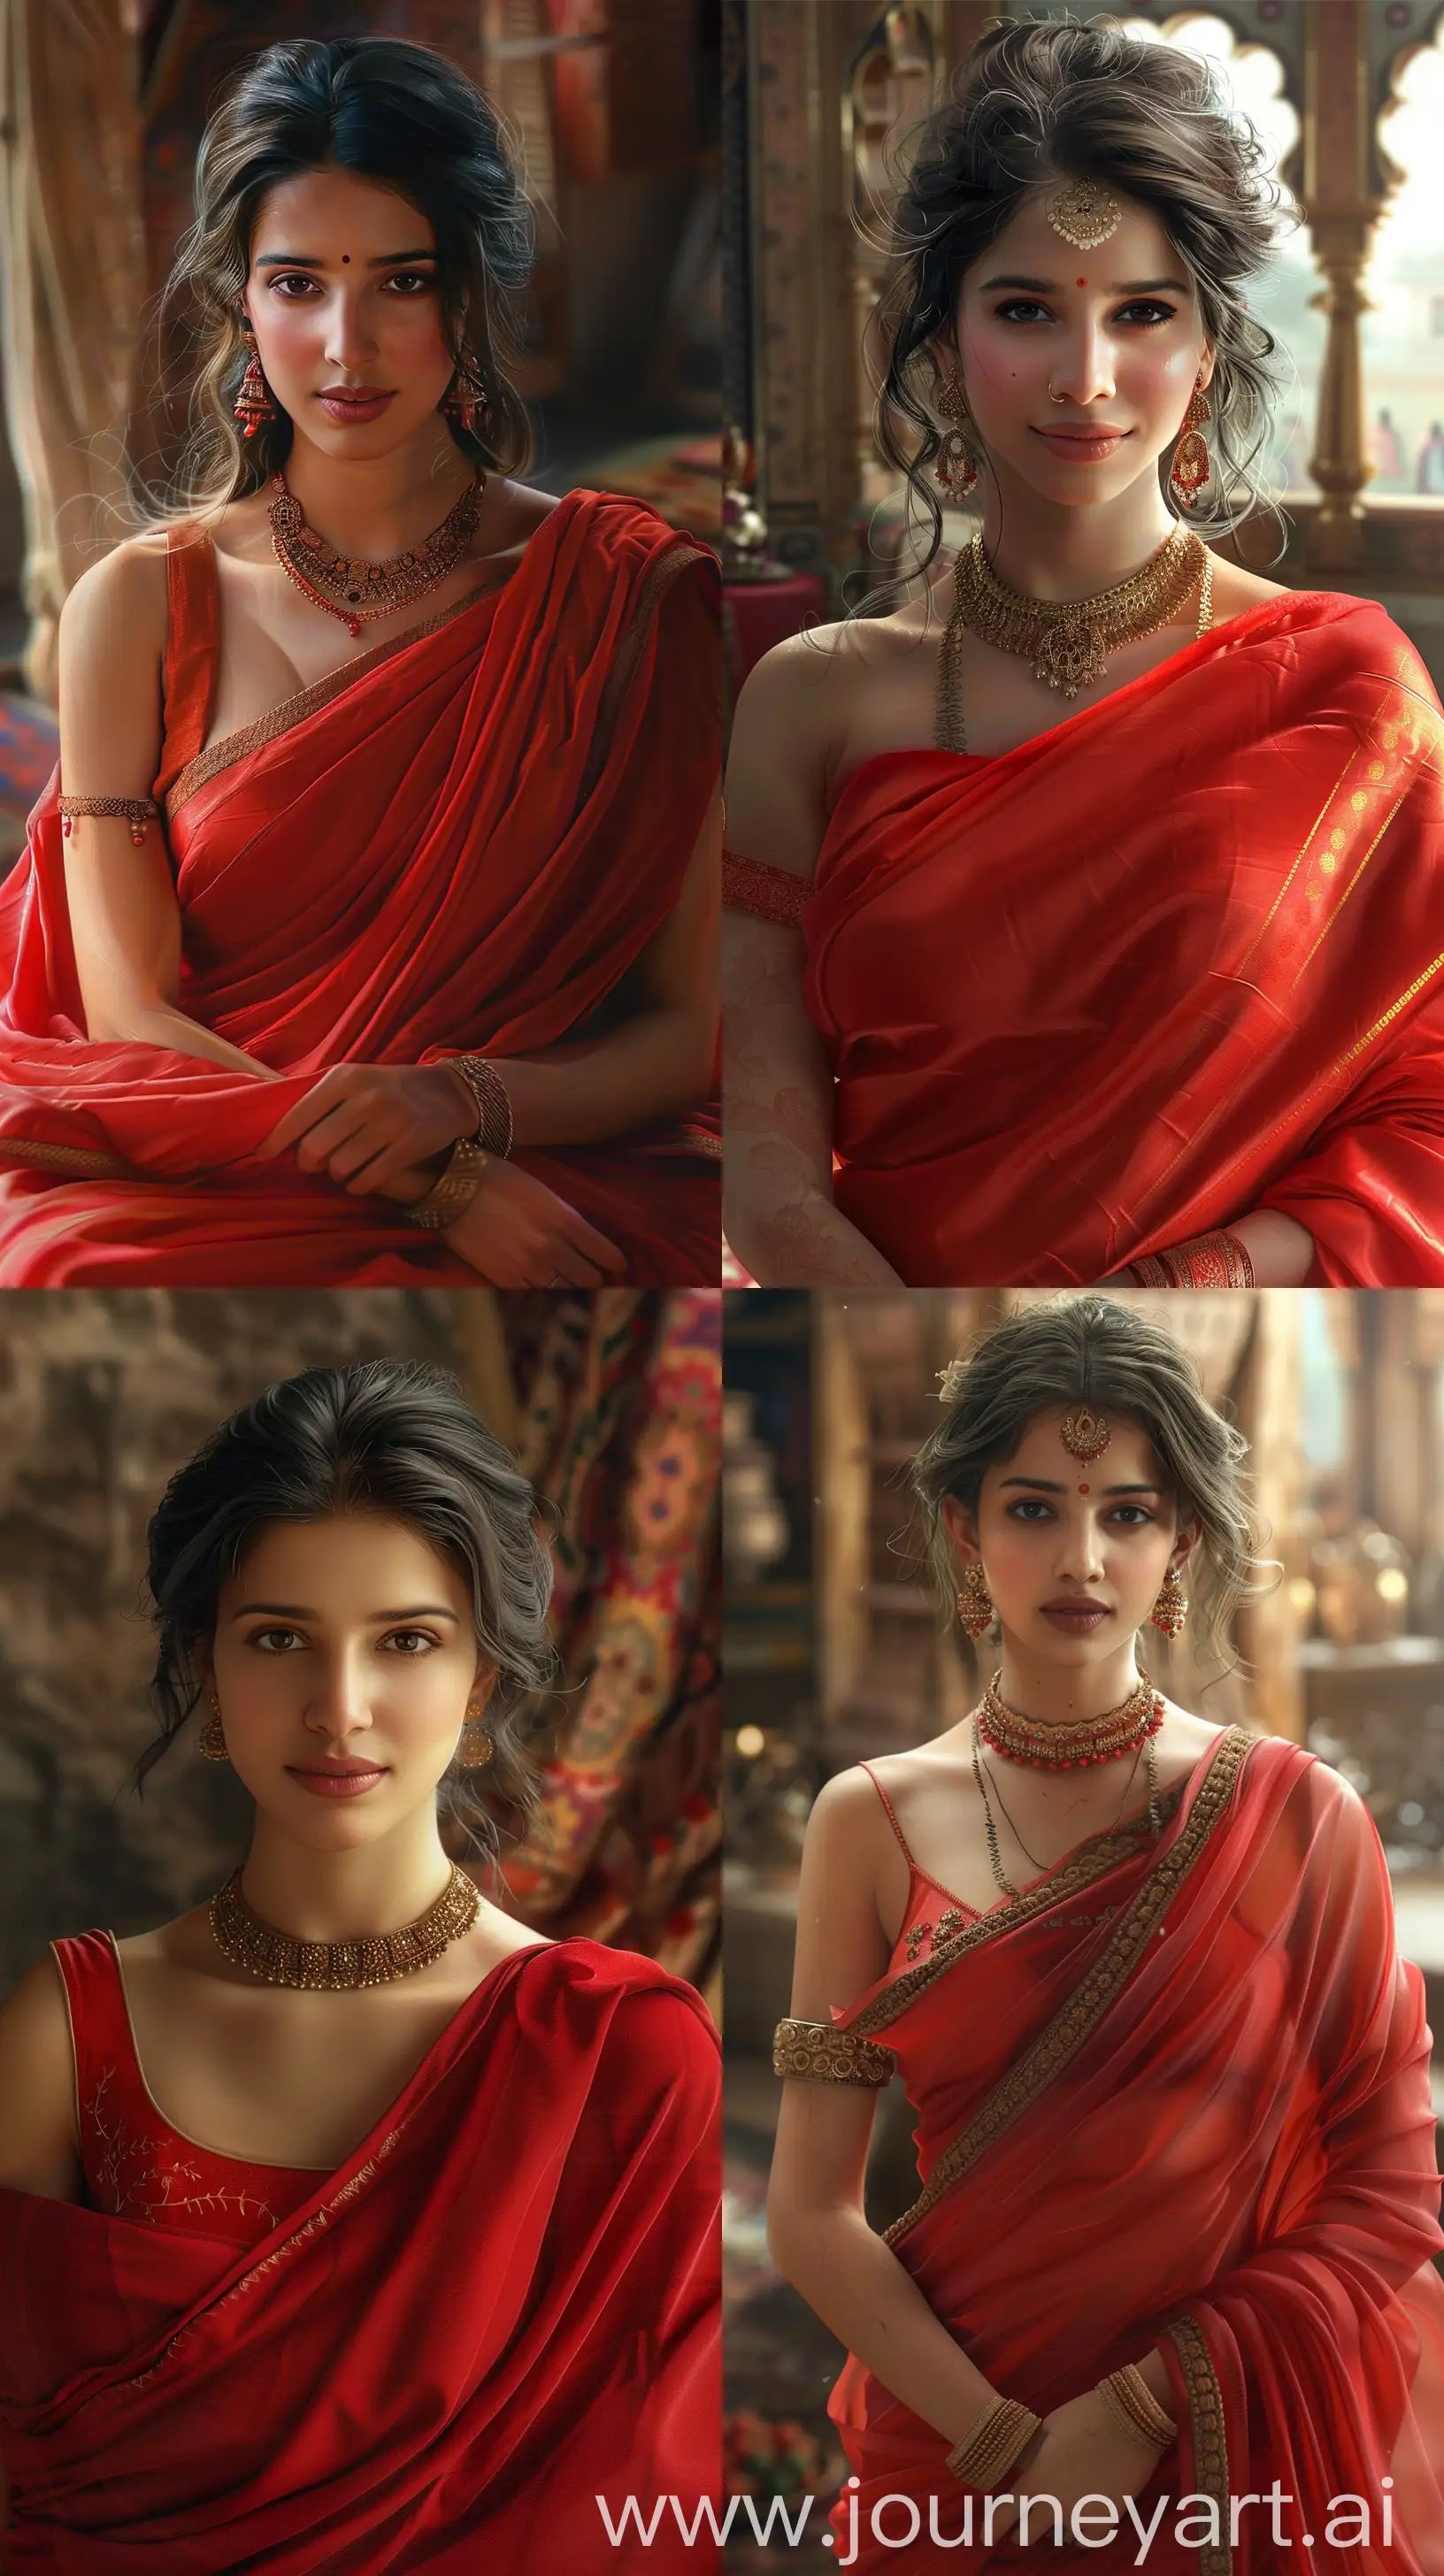 HyperRealistic-Raj-Ravi-Varna-Art-Portrait-of-Ancient-Indian-Woman-in-Red-Saree